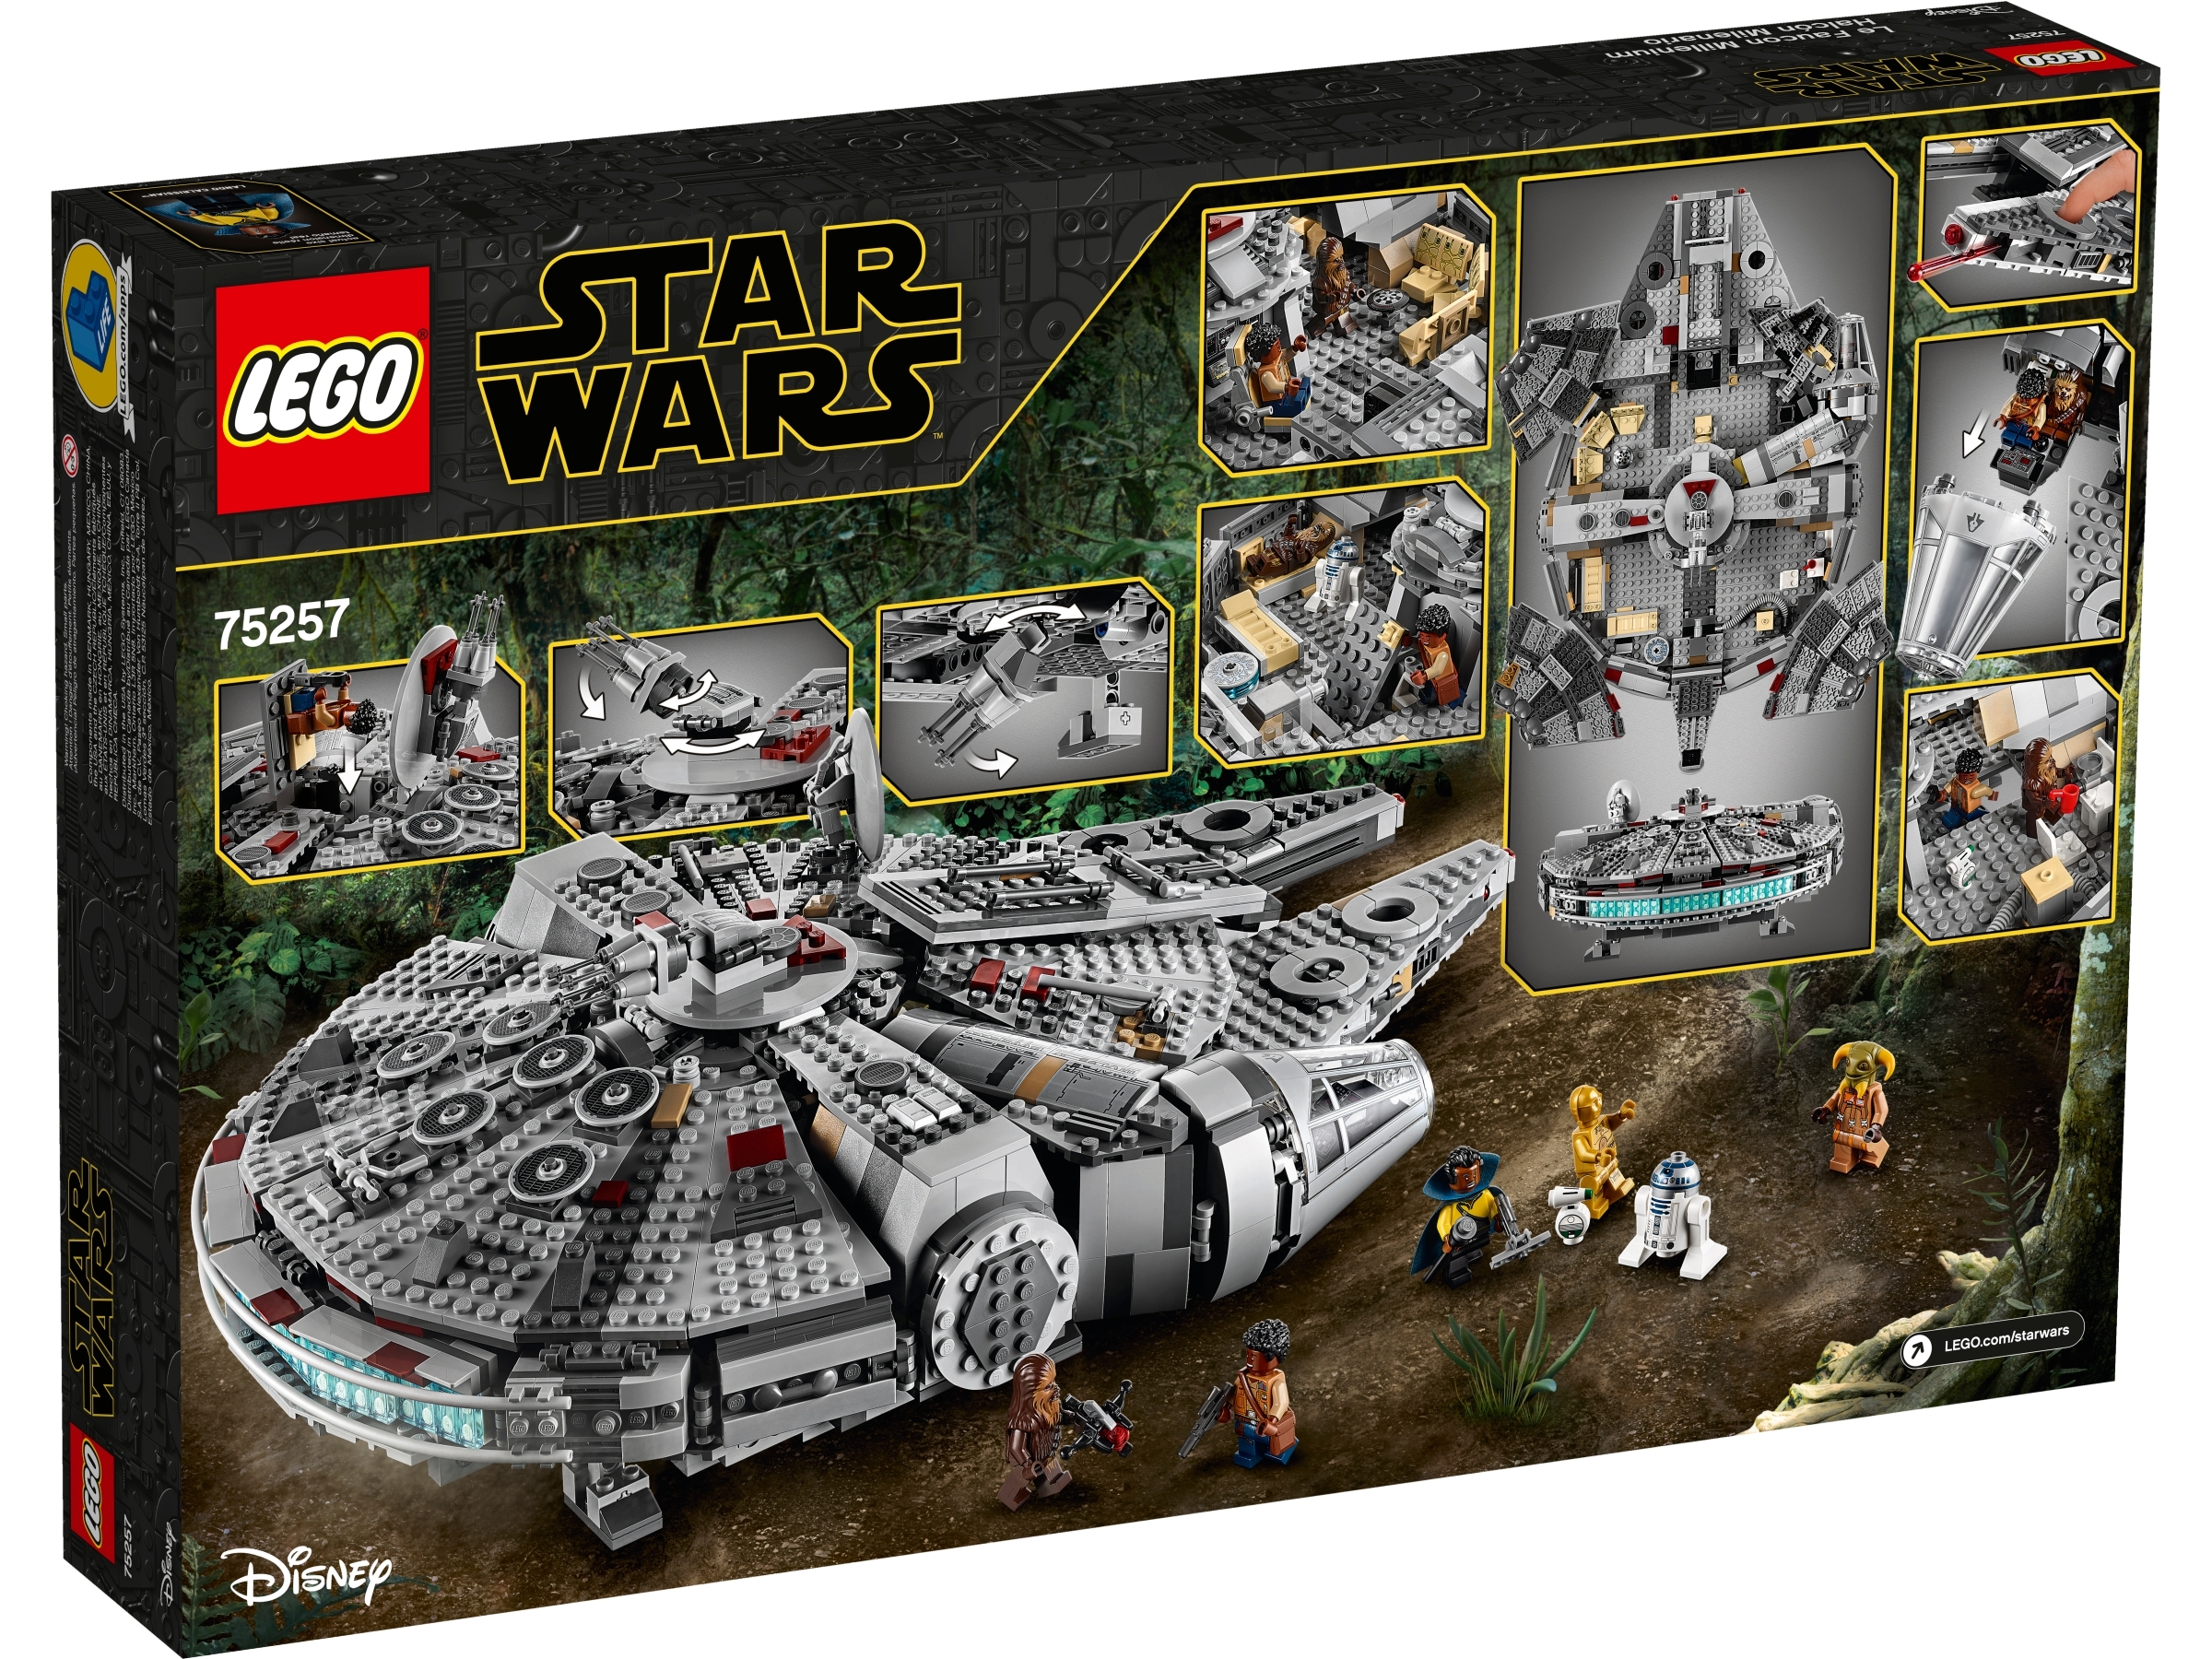 BRAND NEW FACTORY SEALED 2019 LEGO STAR WARS MILLENNIUM FALCON SET 75257 